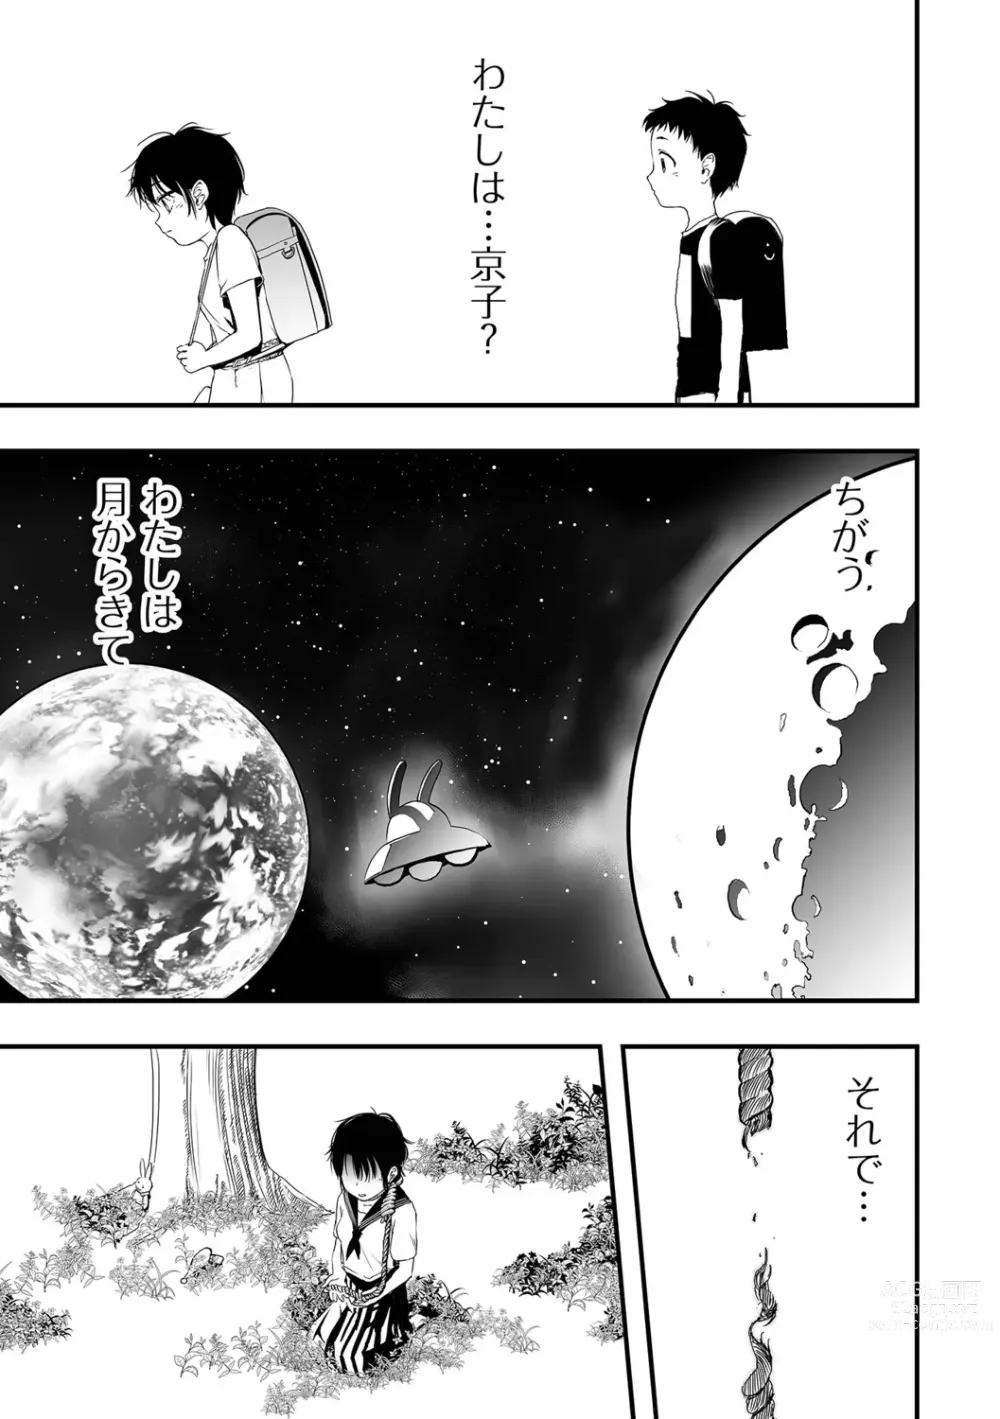 Page 87 of manga Ryona King Vol.23